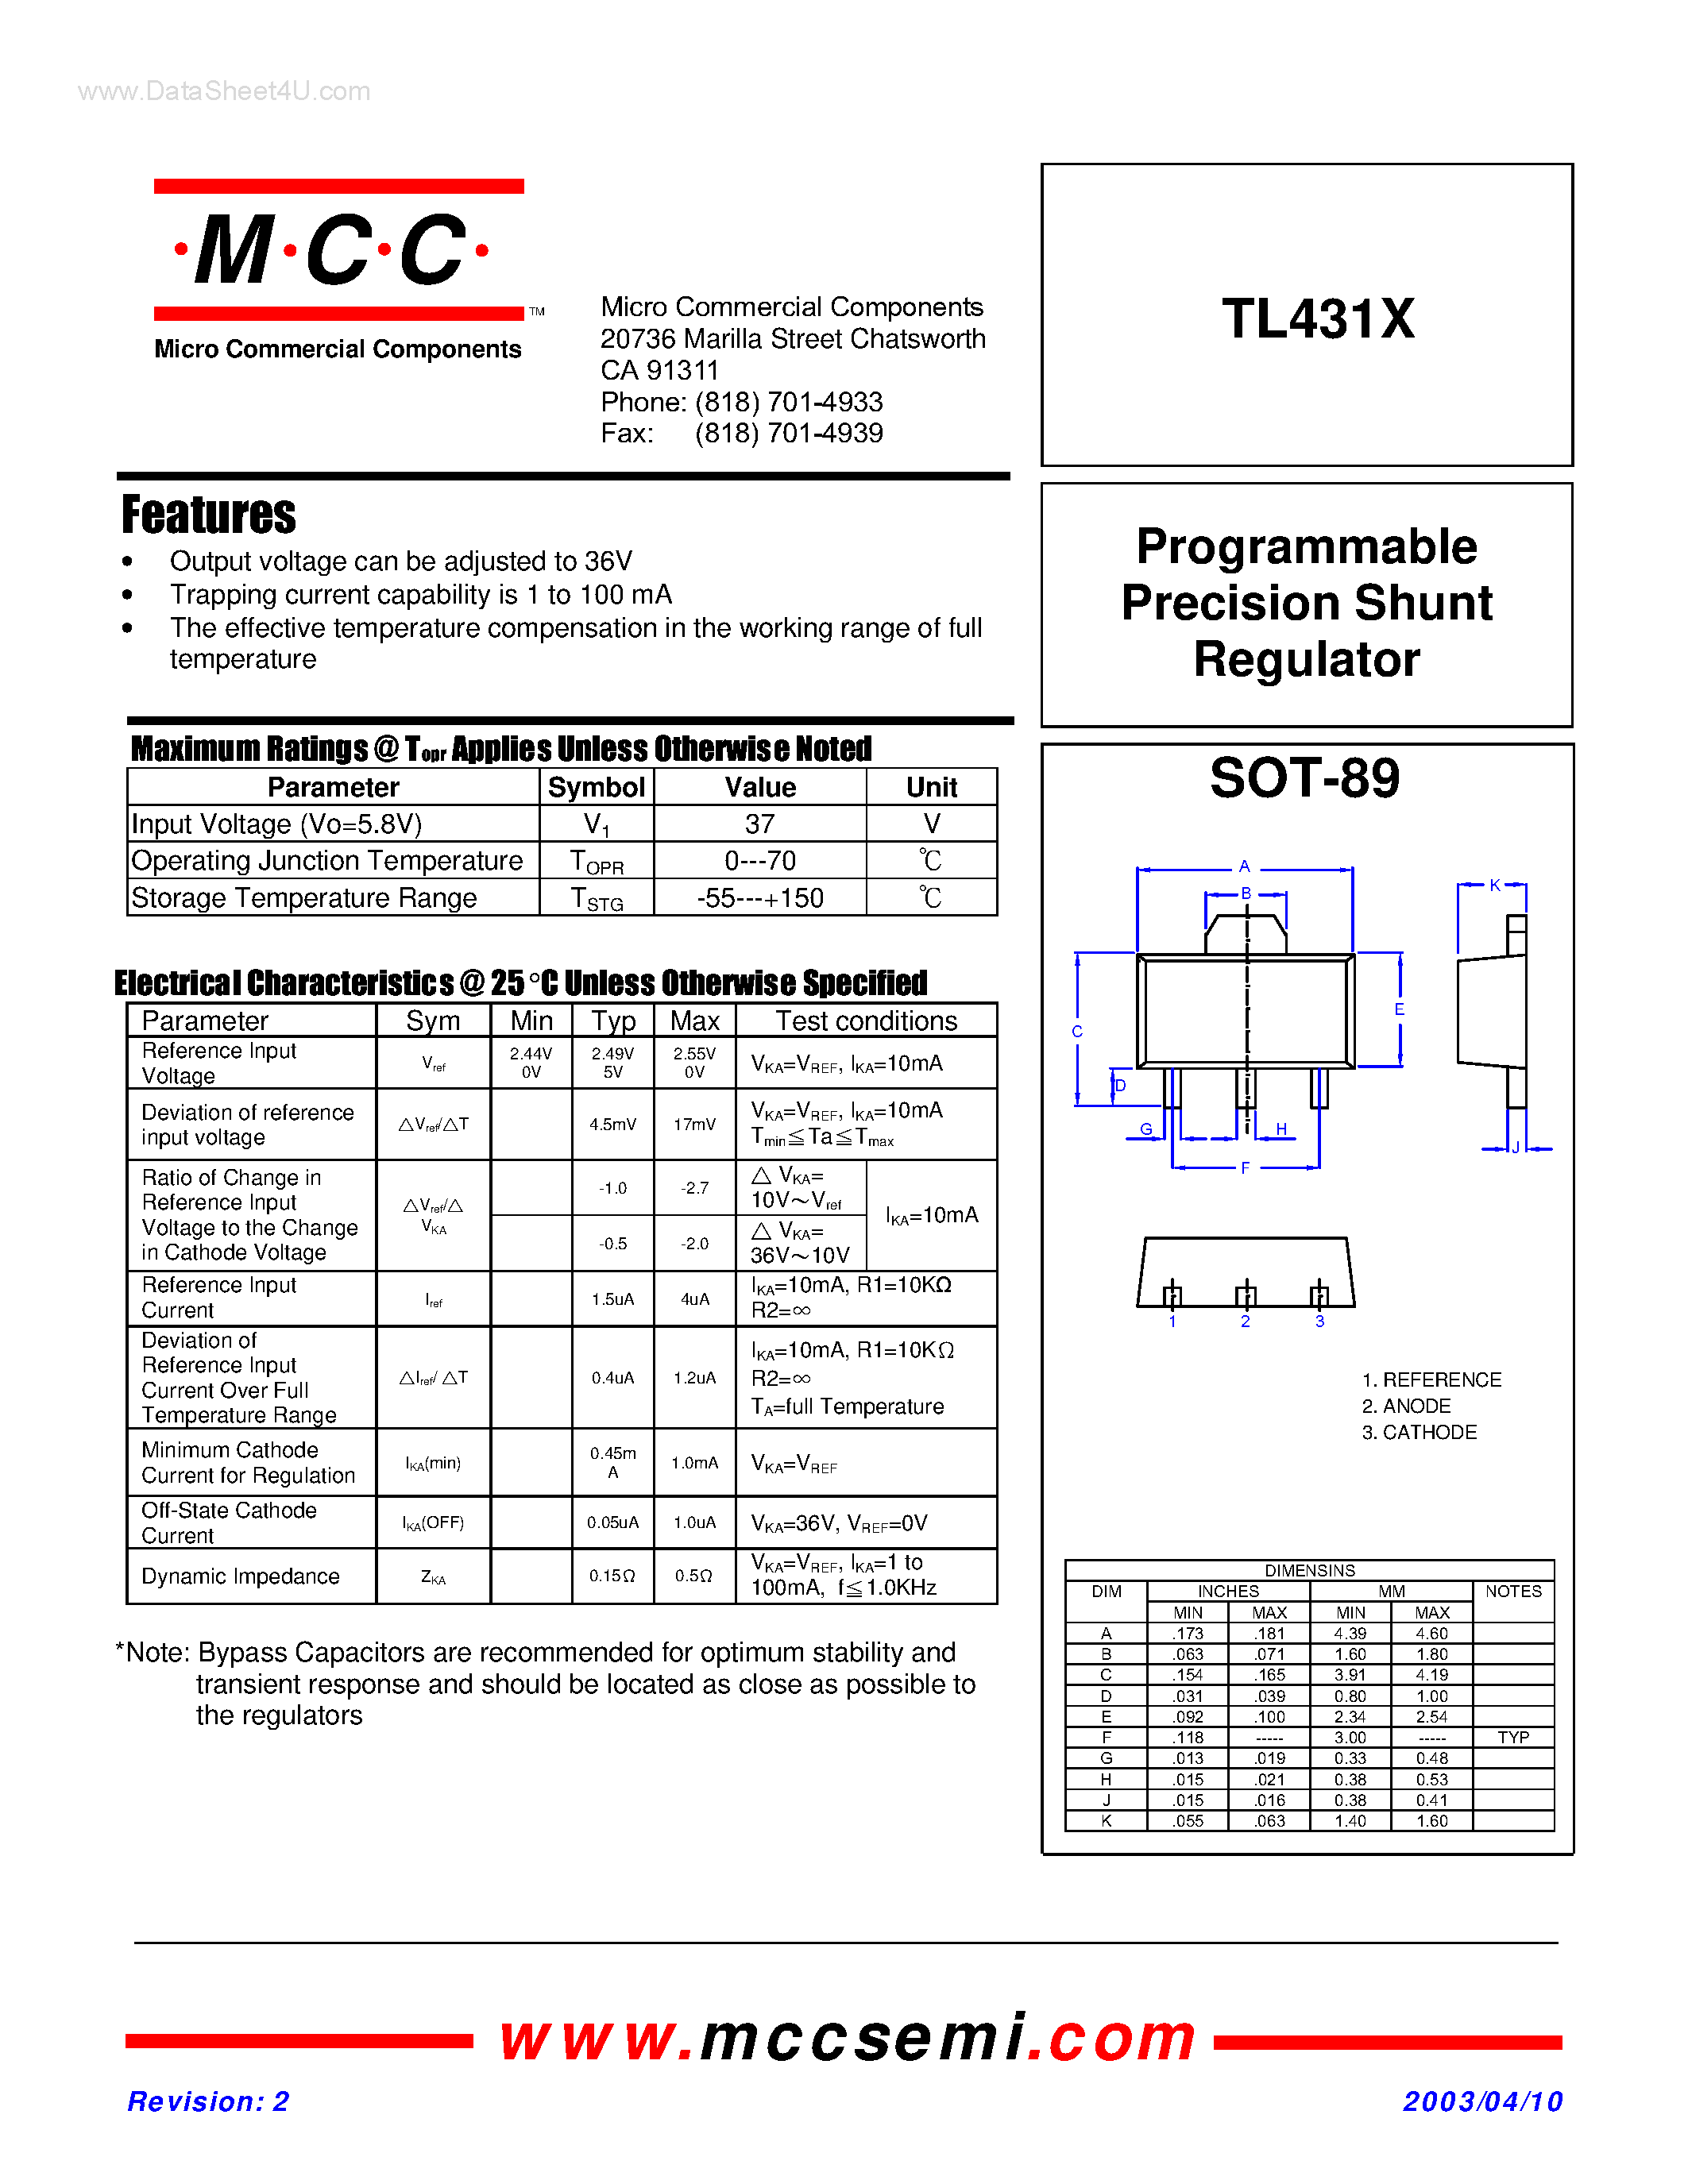 Даташит TL431X - Programmable Precision Shunt Regulator страница 1